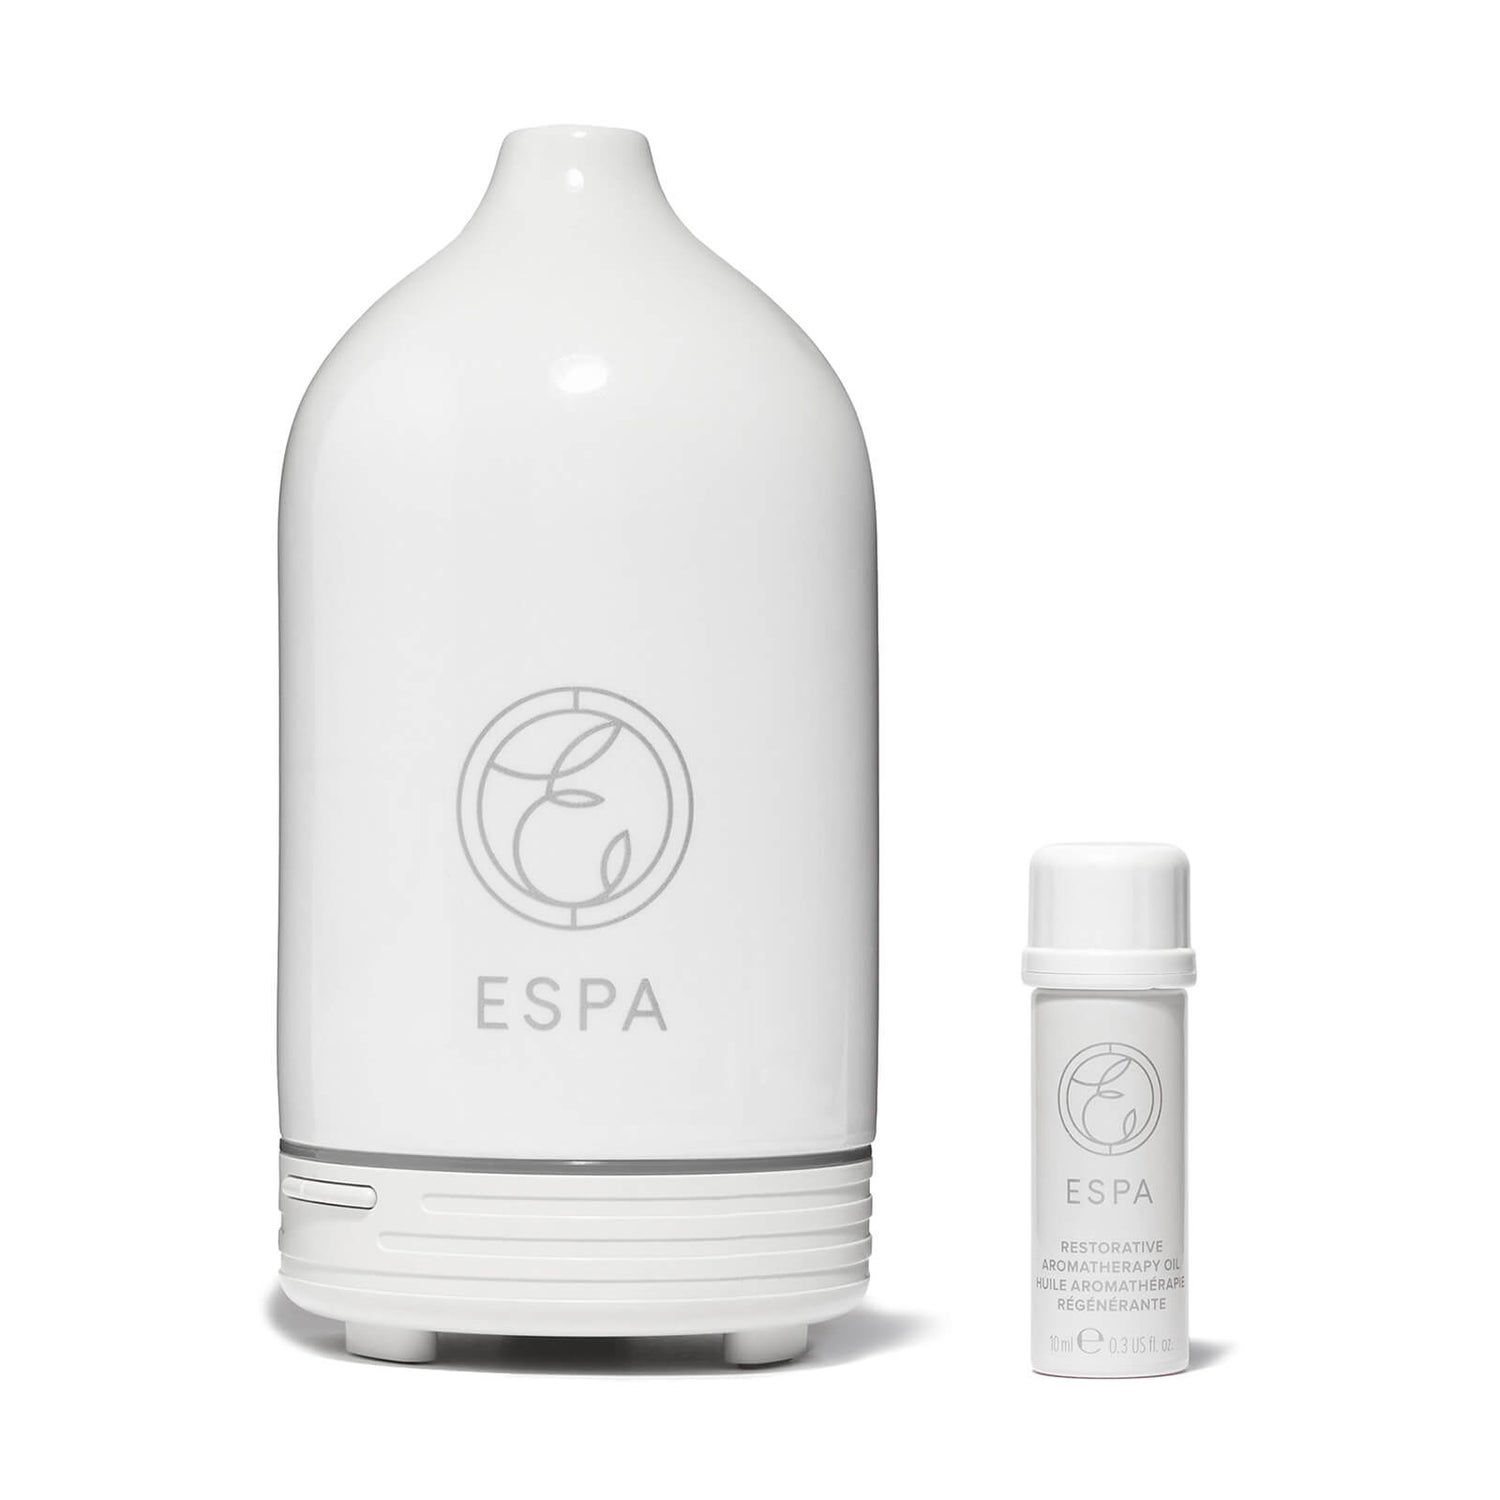 ESPA Aromatherapy Essential Oil Diffuser Starter Kit - Restorative (Worth £105.00)